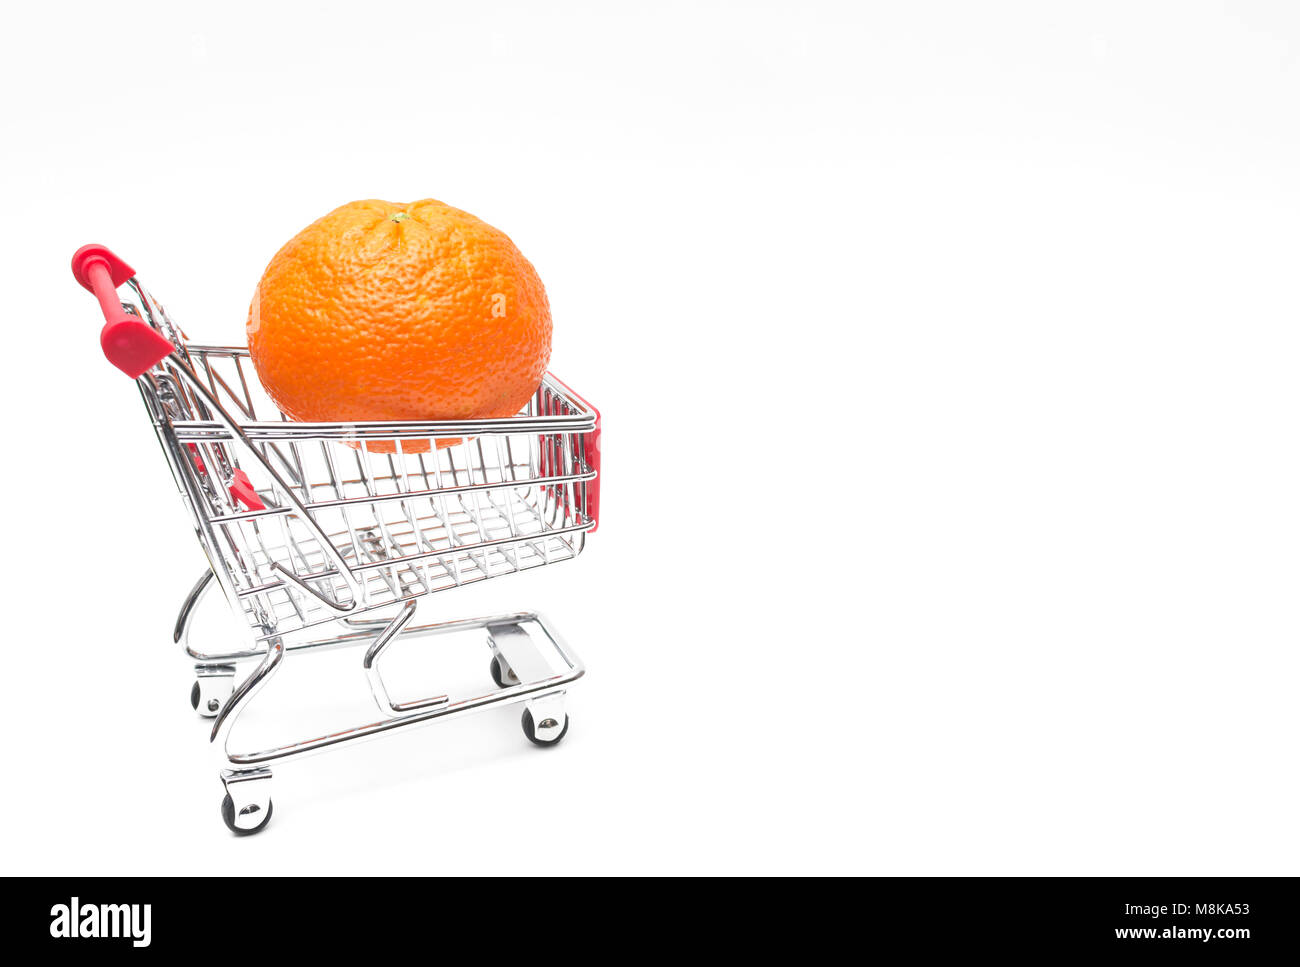 Buying a orange from supermarket, Orange in shopping cart, shoping cart isolated on white background Stock Photo